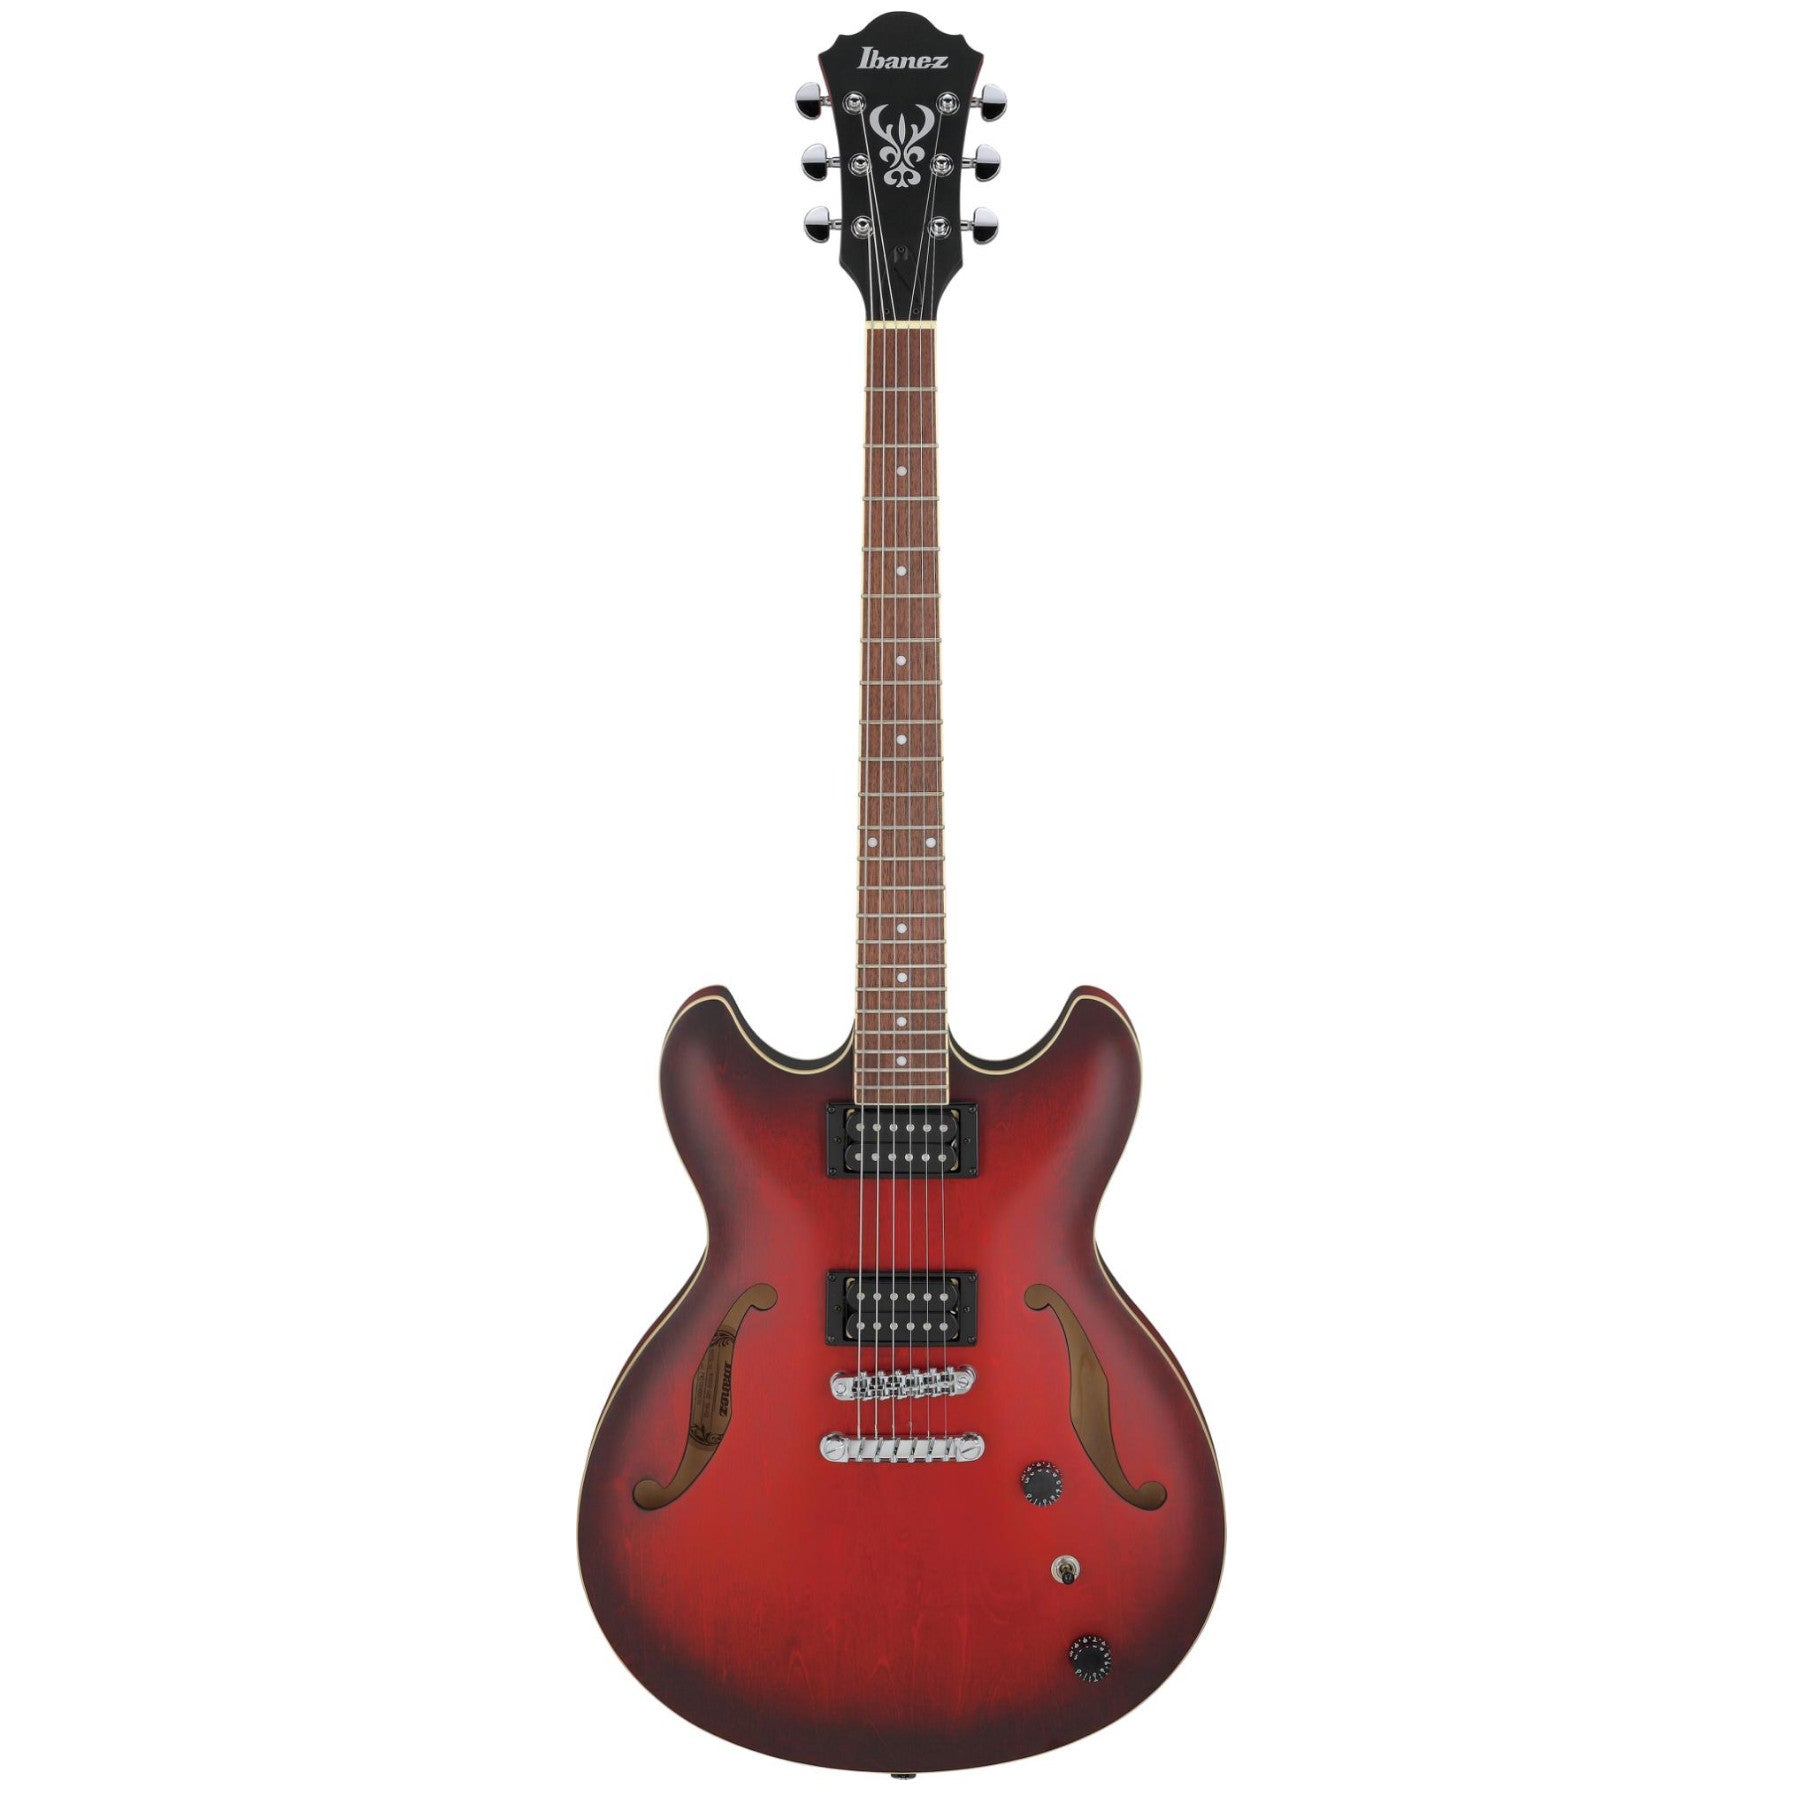 Ibanez AS53SRF Artcore Semi-Hollow Electric Guitar - Sunburst Red Flat Front